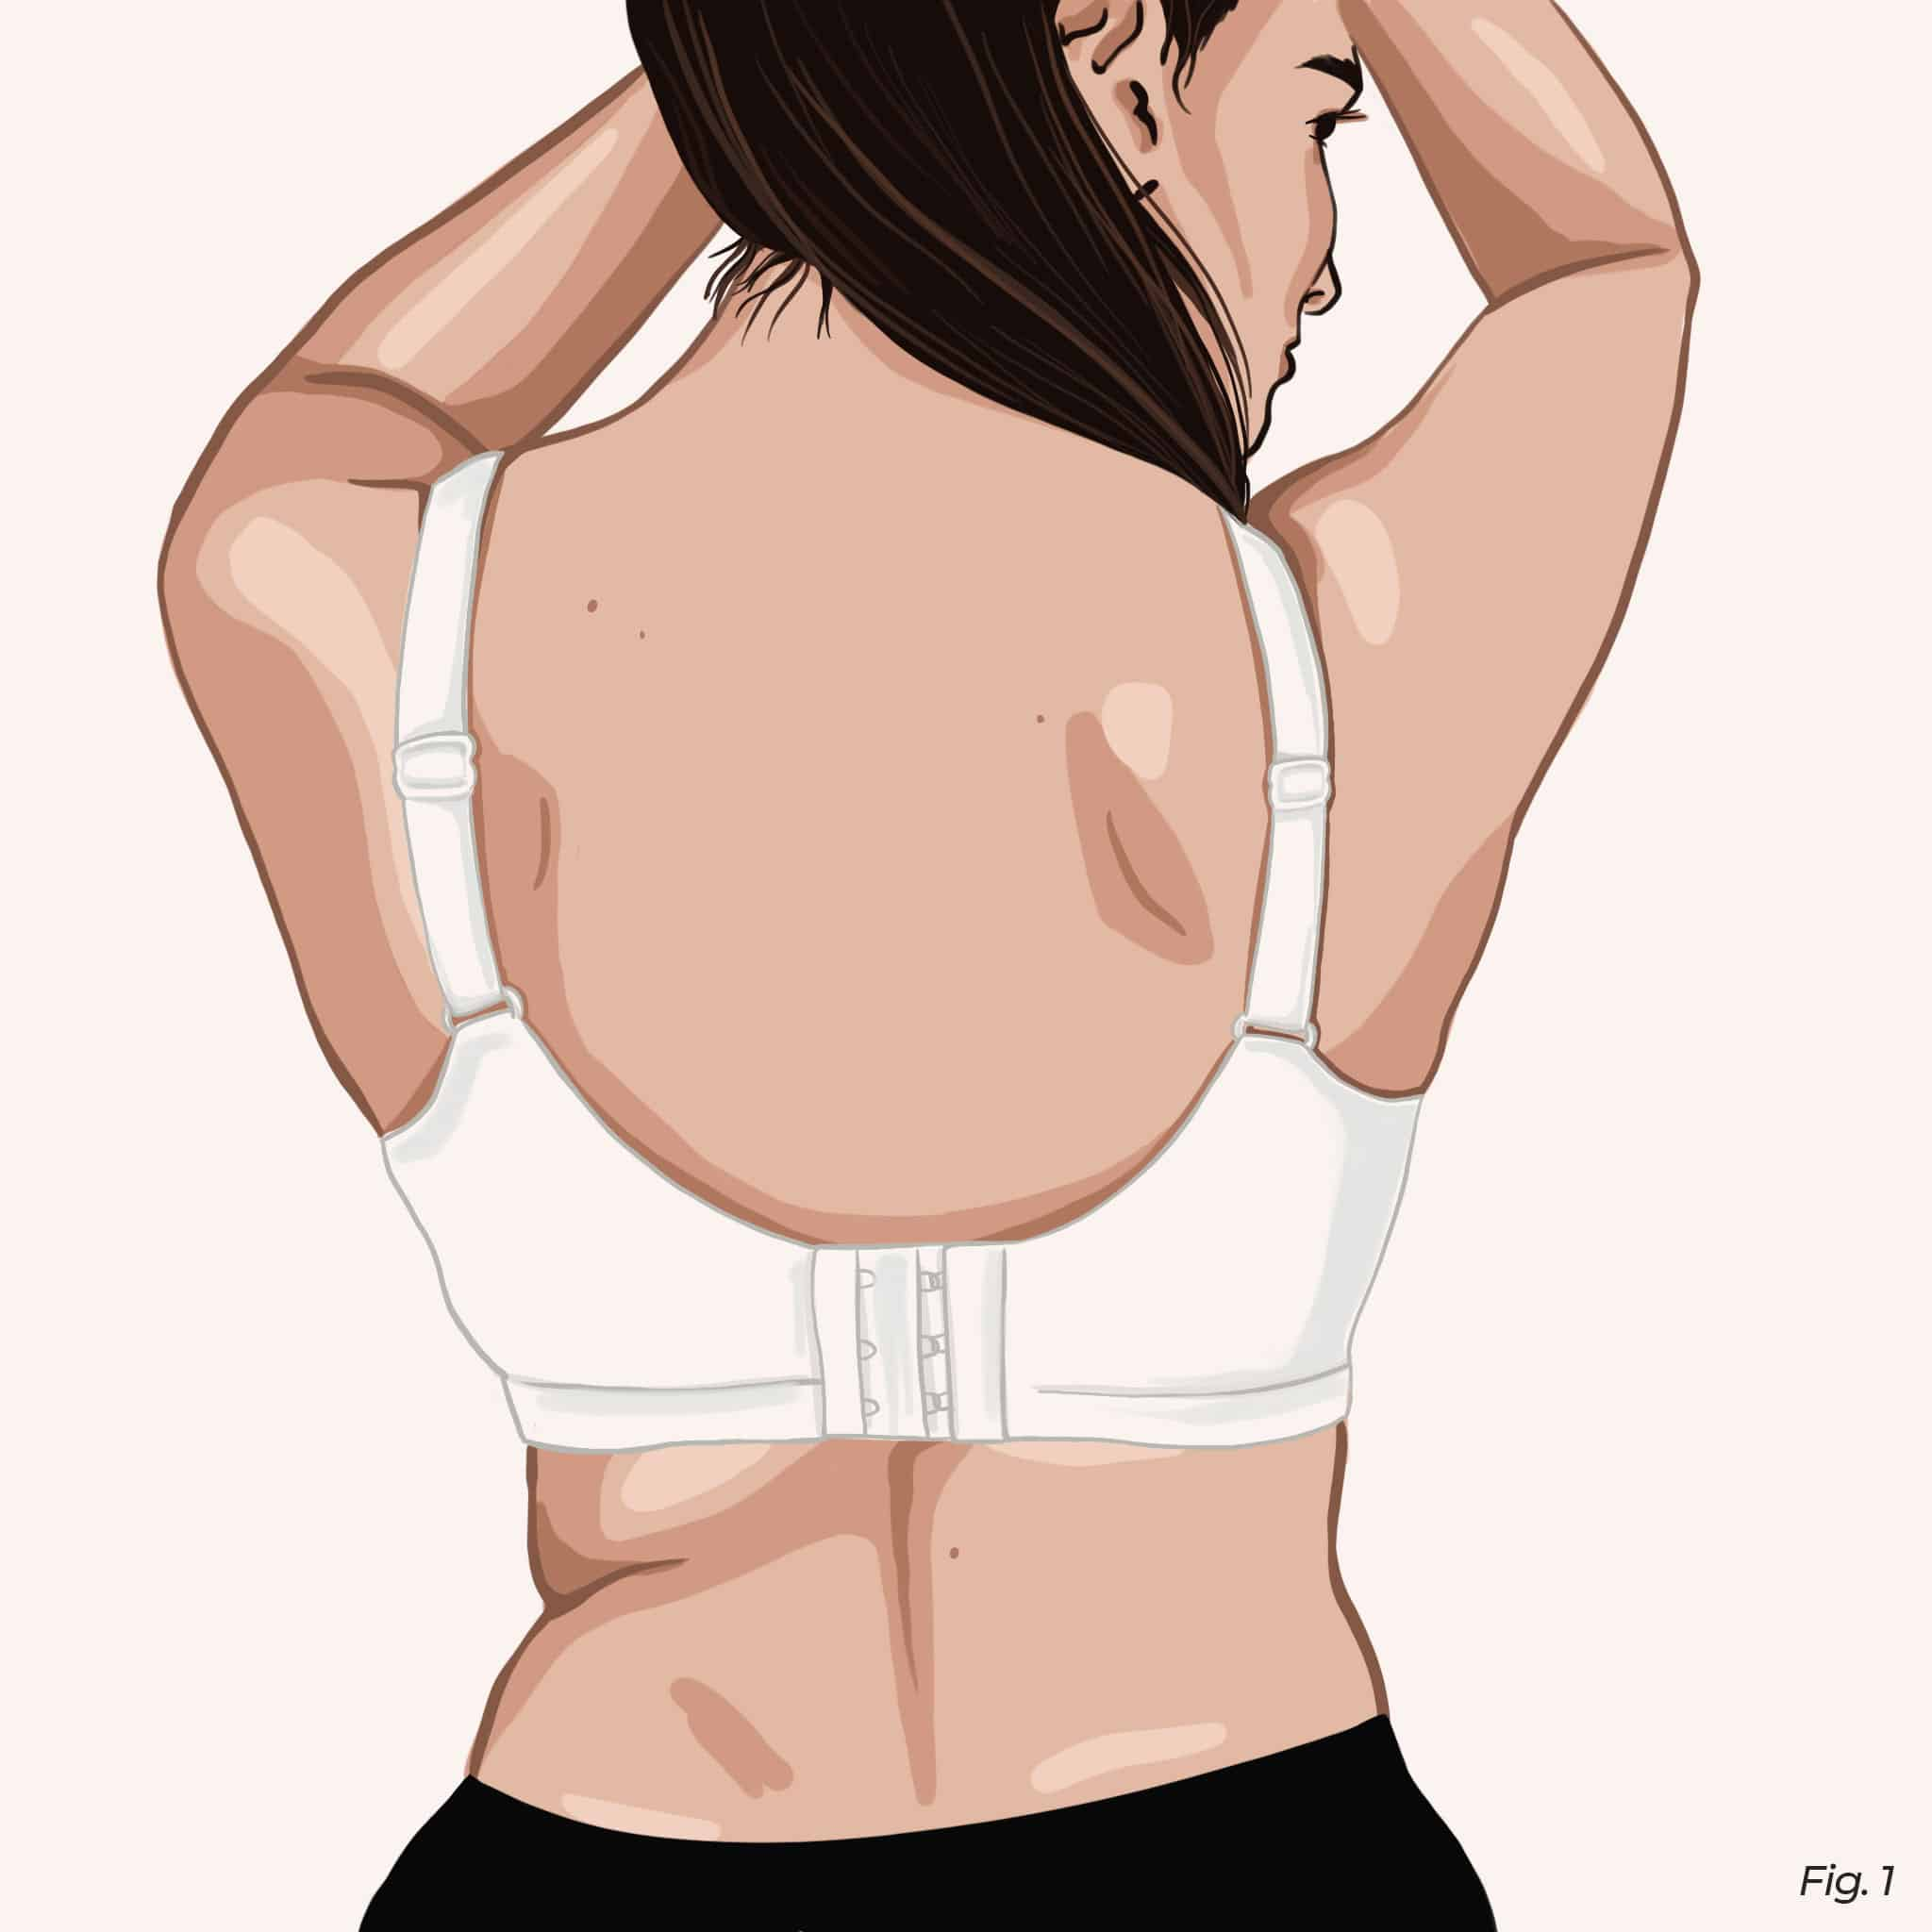 Illustration of a girl wearing bra